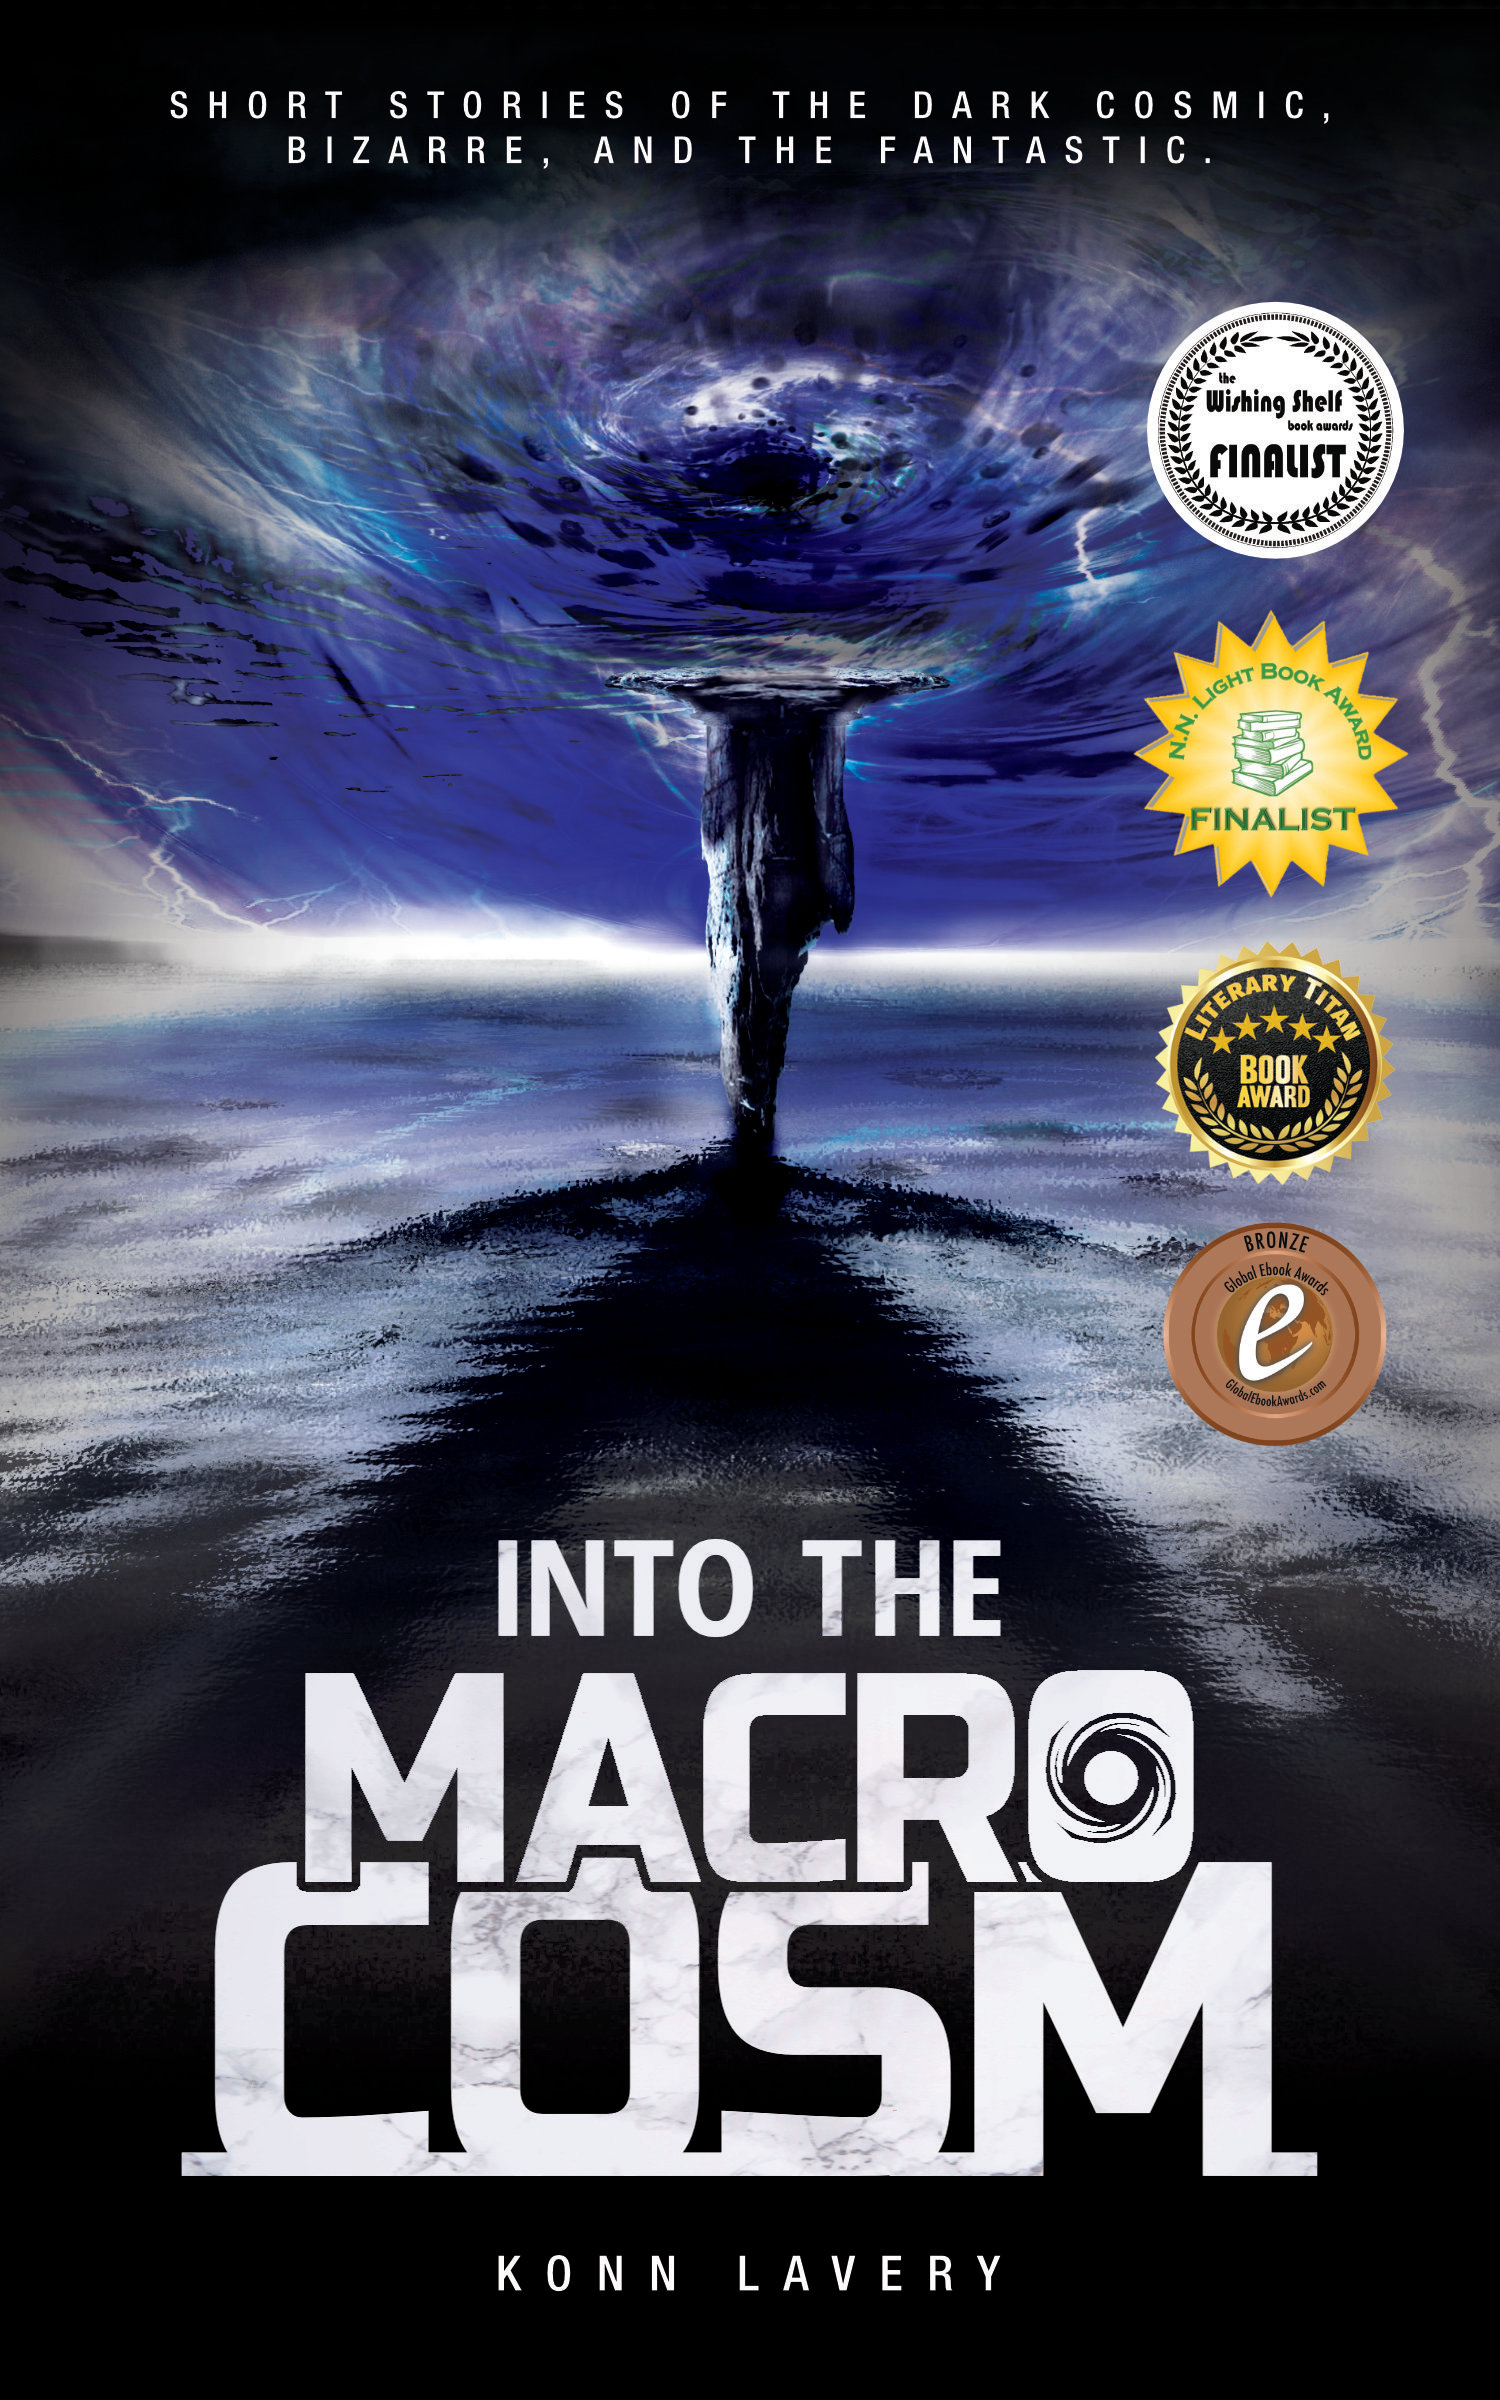 Into the Macrocosm by Konn Lavery Canadian dark cosmic horror short stories